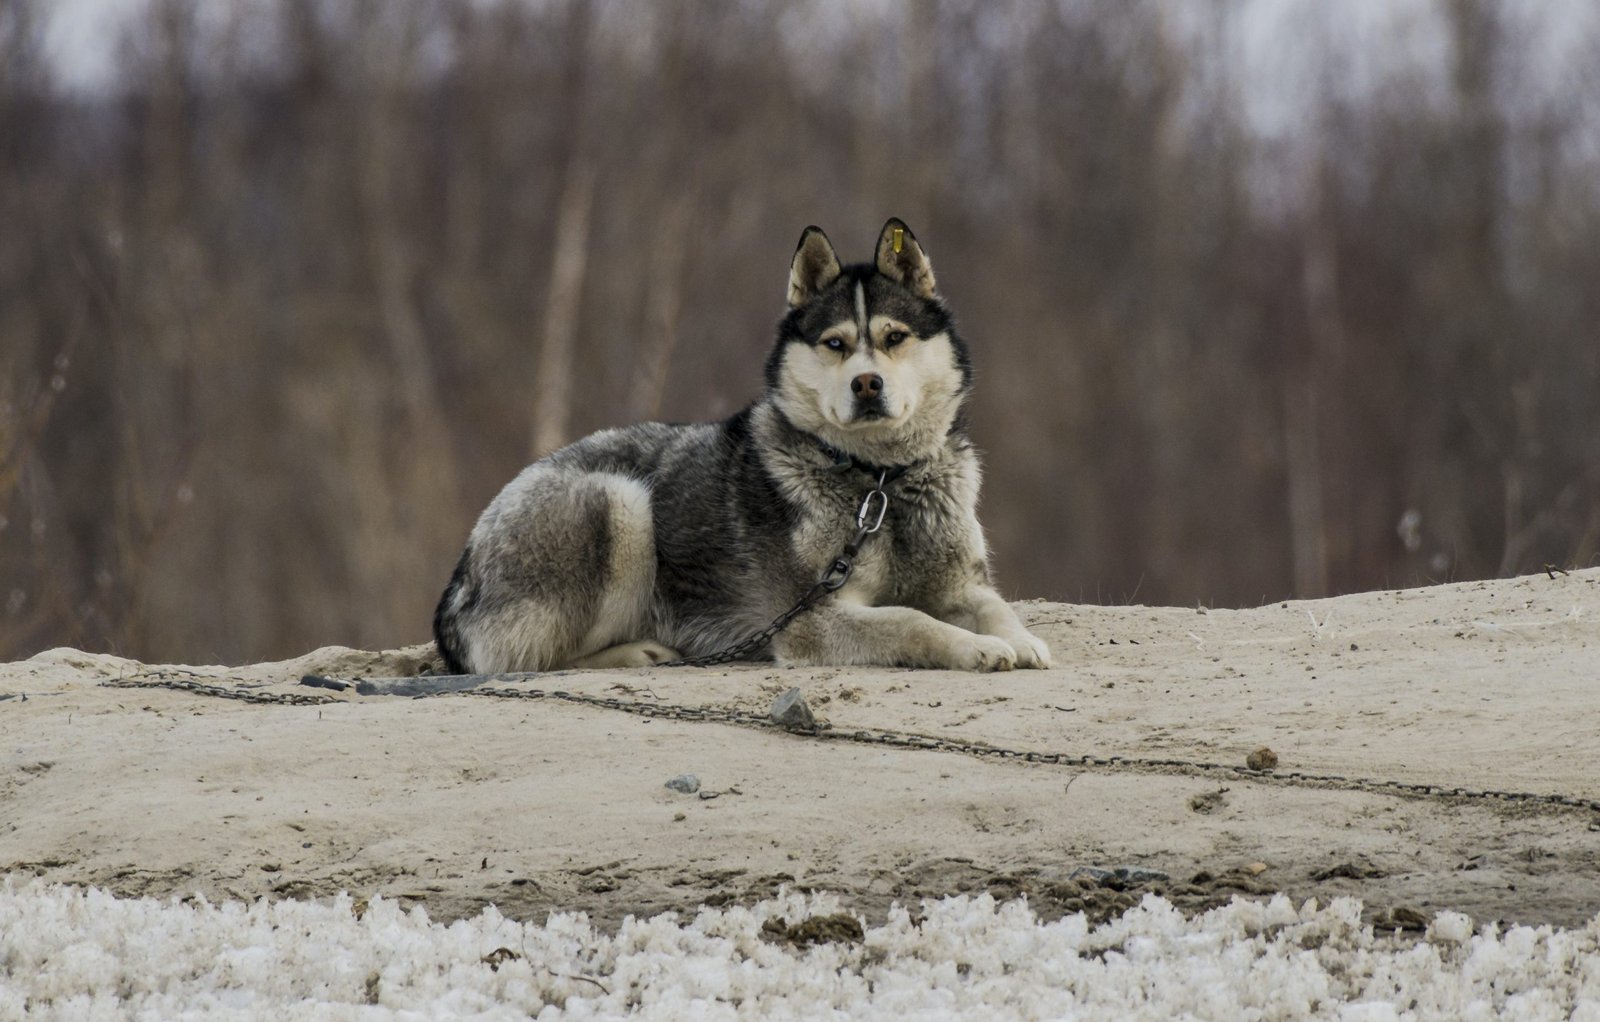 Are Siberian Huskies good guard dogs